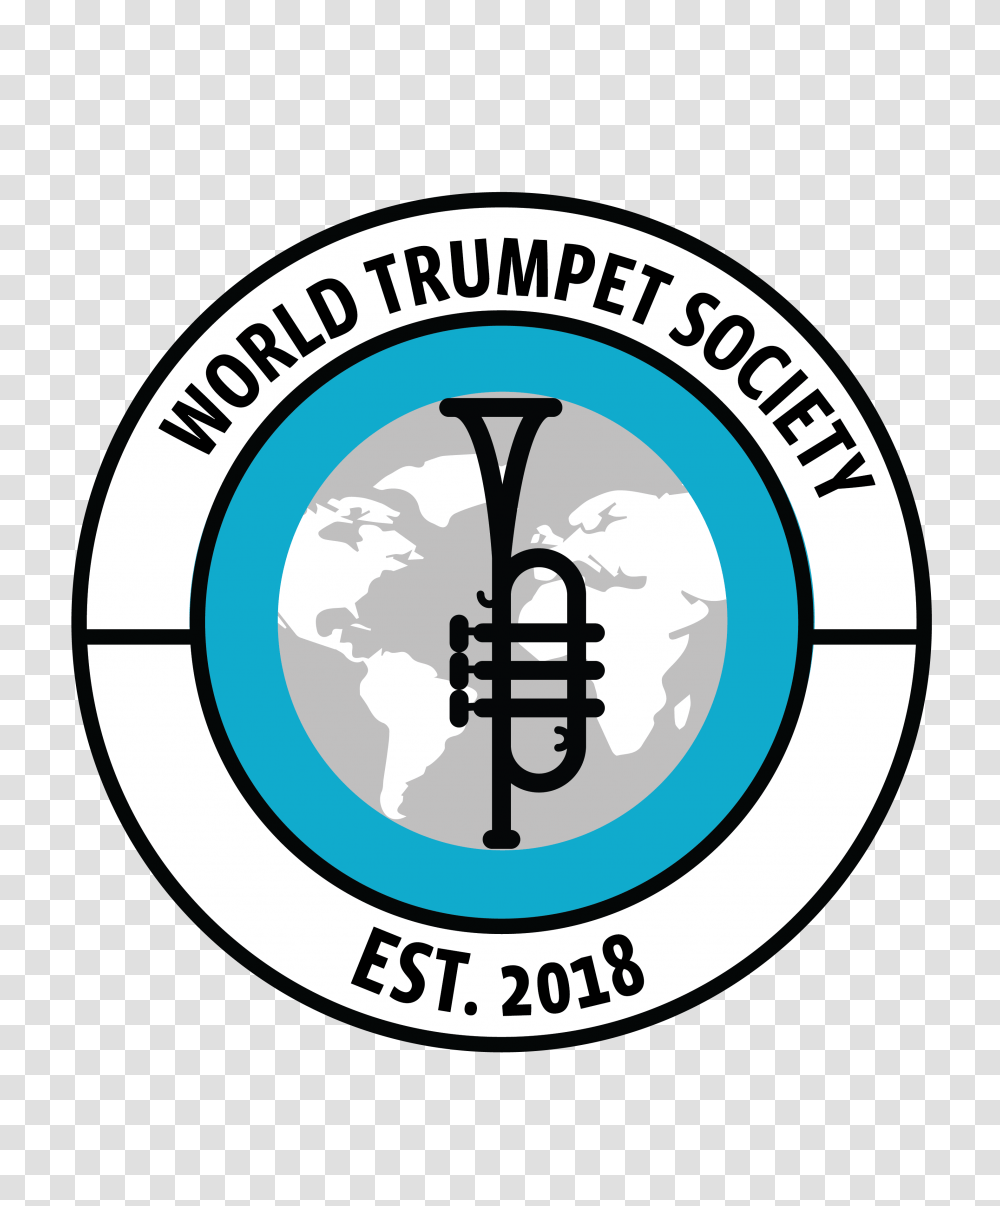 Seminar Postponed To World Trumpet Society, Label, Sticker Transparent Png